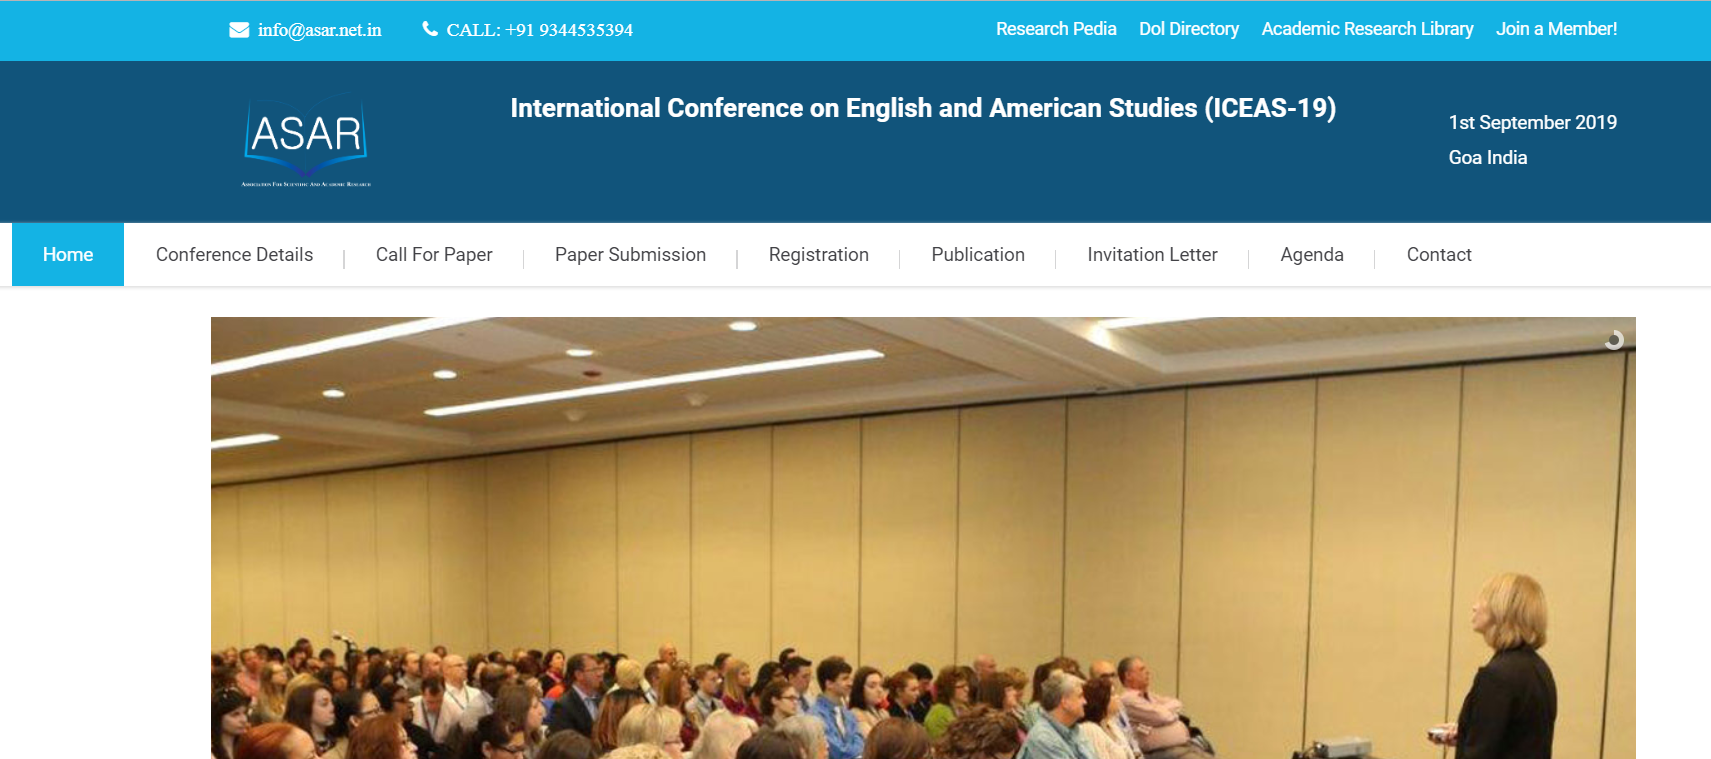 International Conference on English and American Studies (ICEAS-19), Goa, Karnataka, India